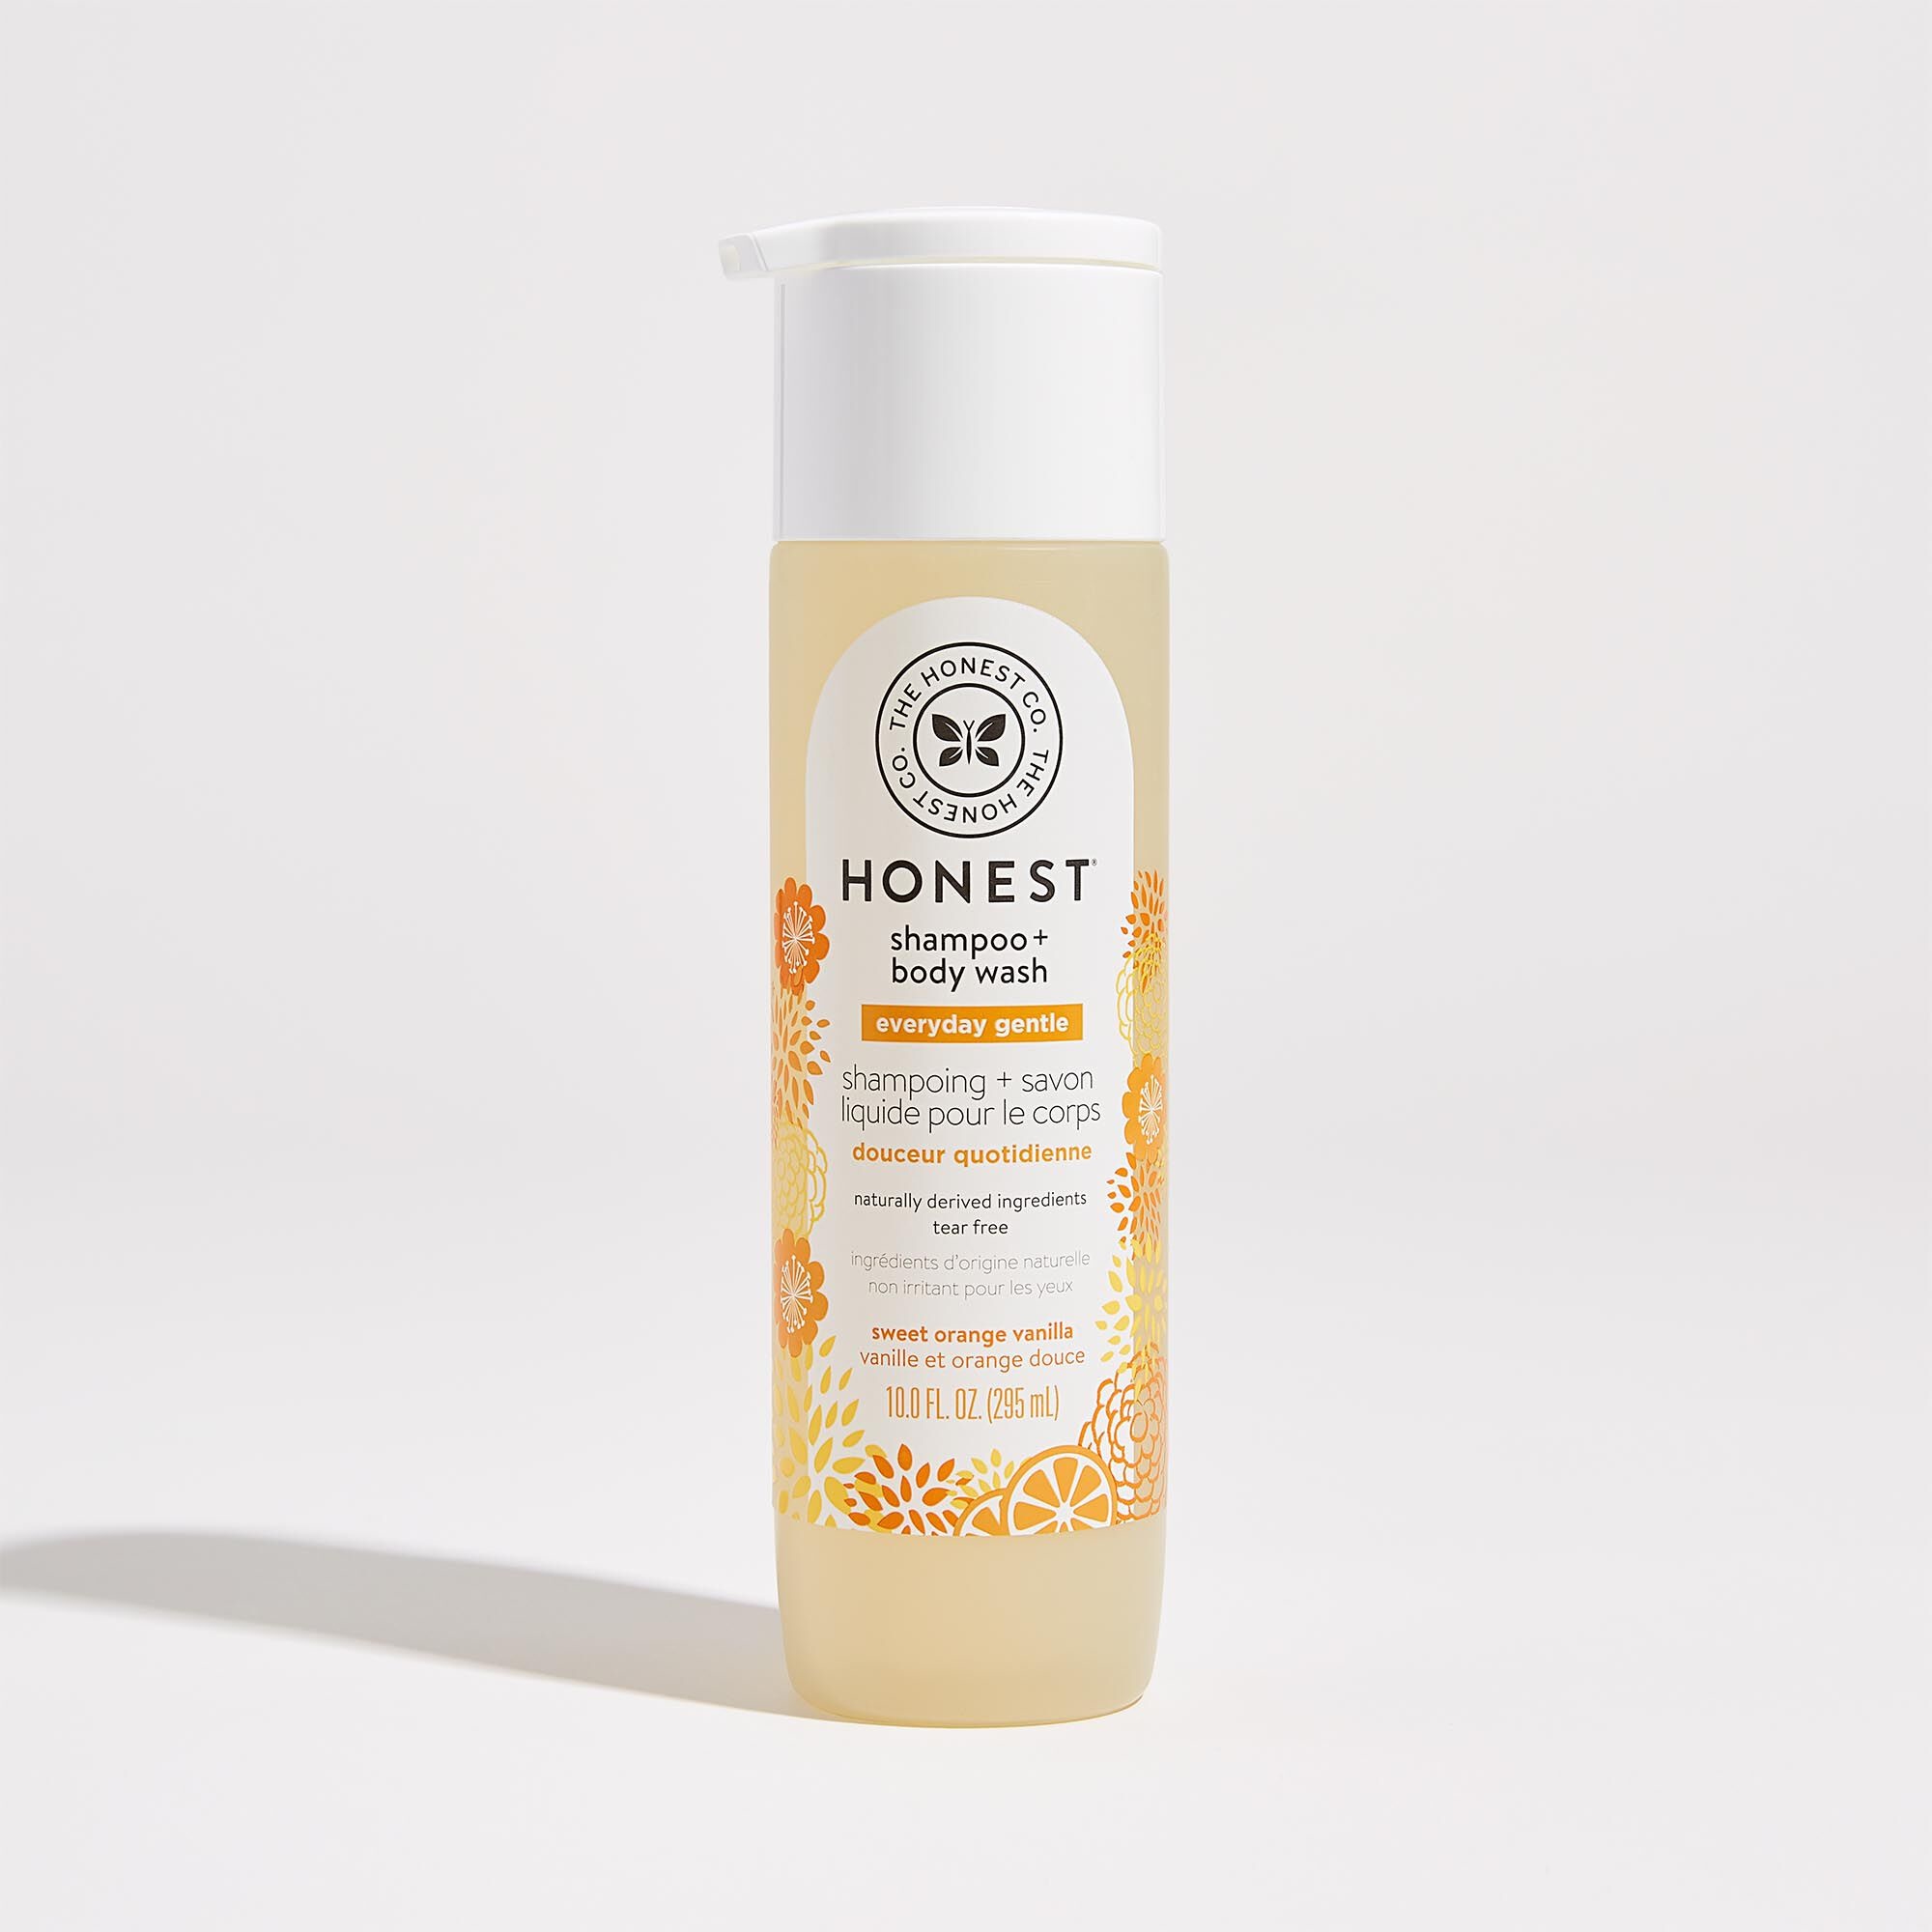 The Honest Co. Honest shampoo + body wash everyday gentle Sweet Orange Vanilla -295ml